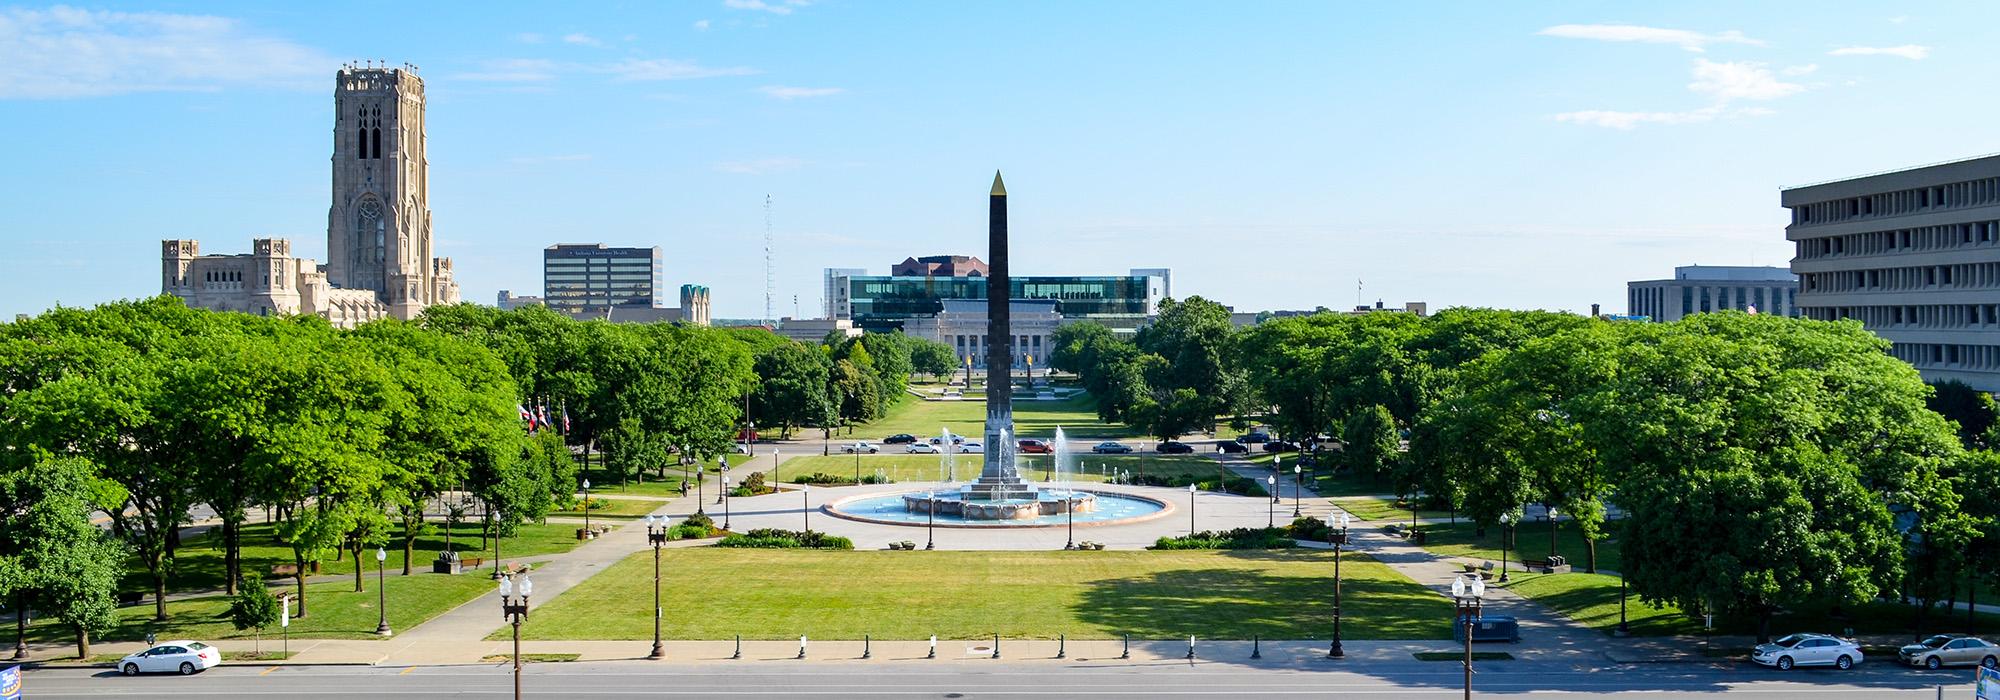 Indiana War Memorial, Indianapolis, IN